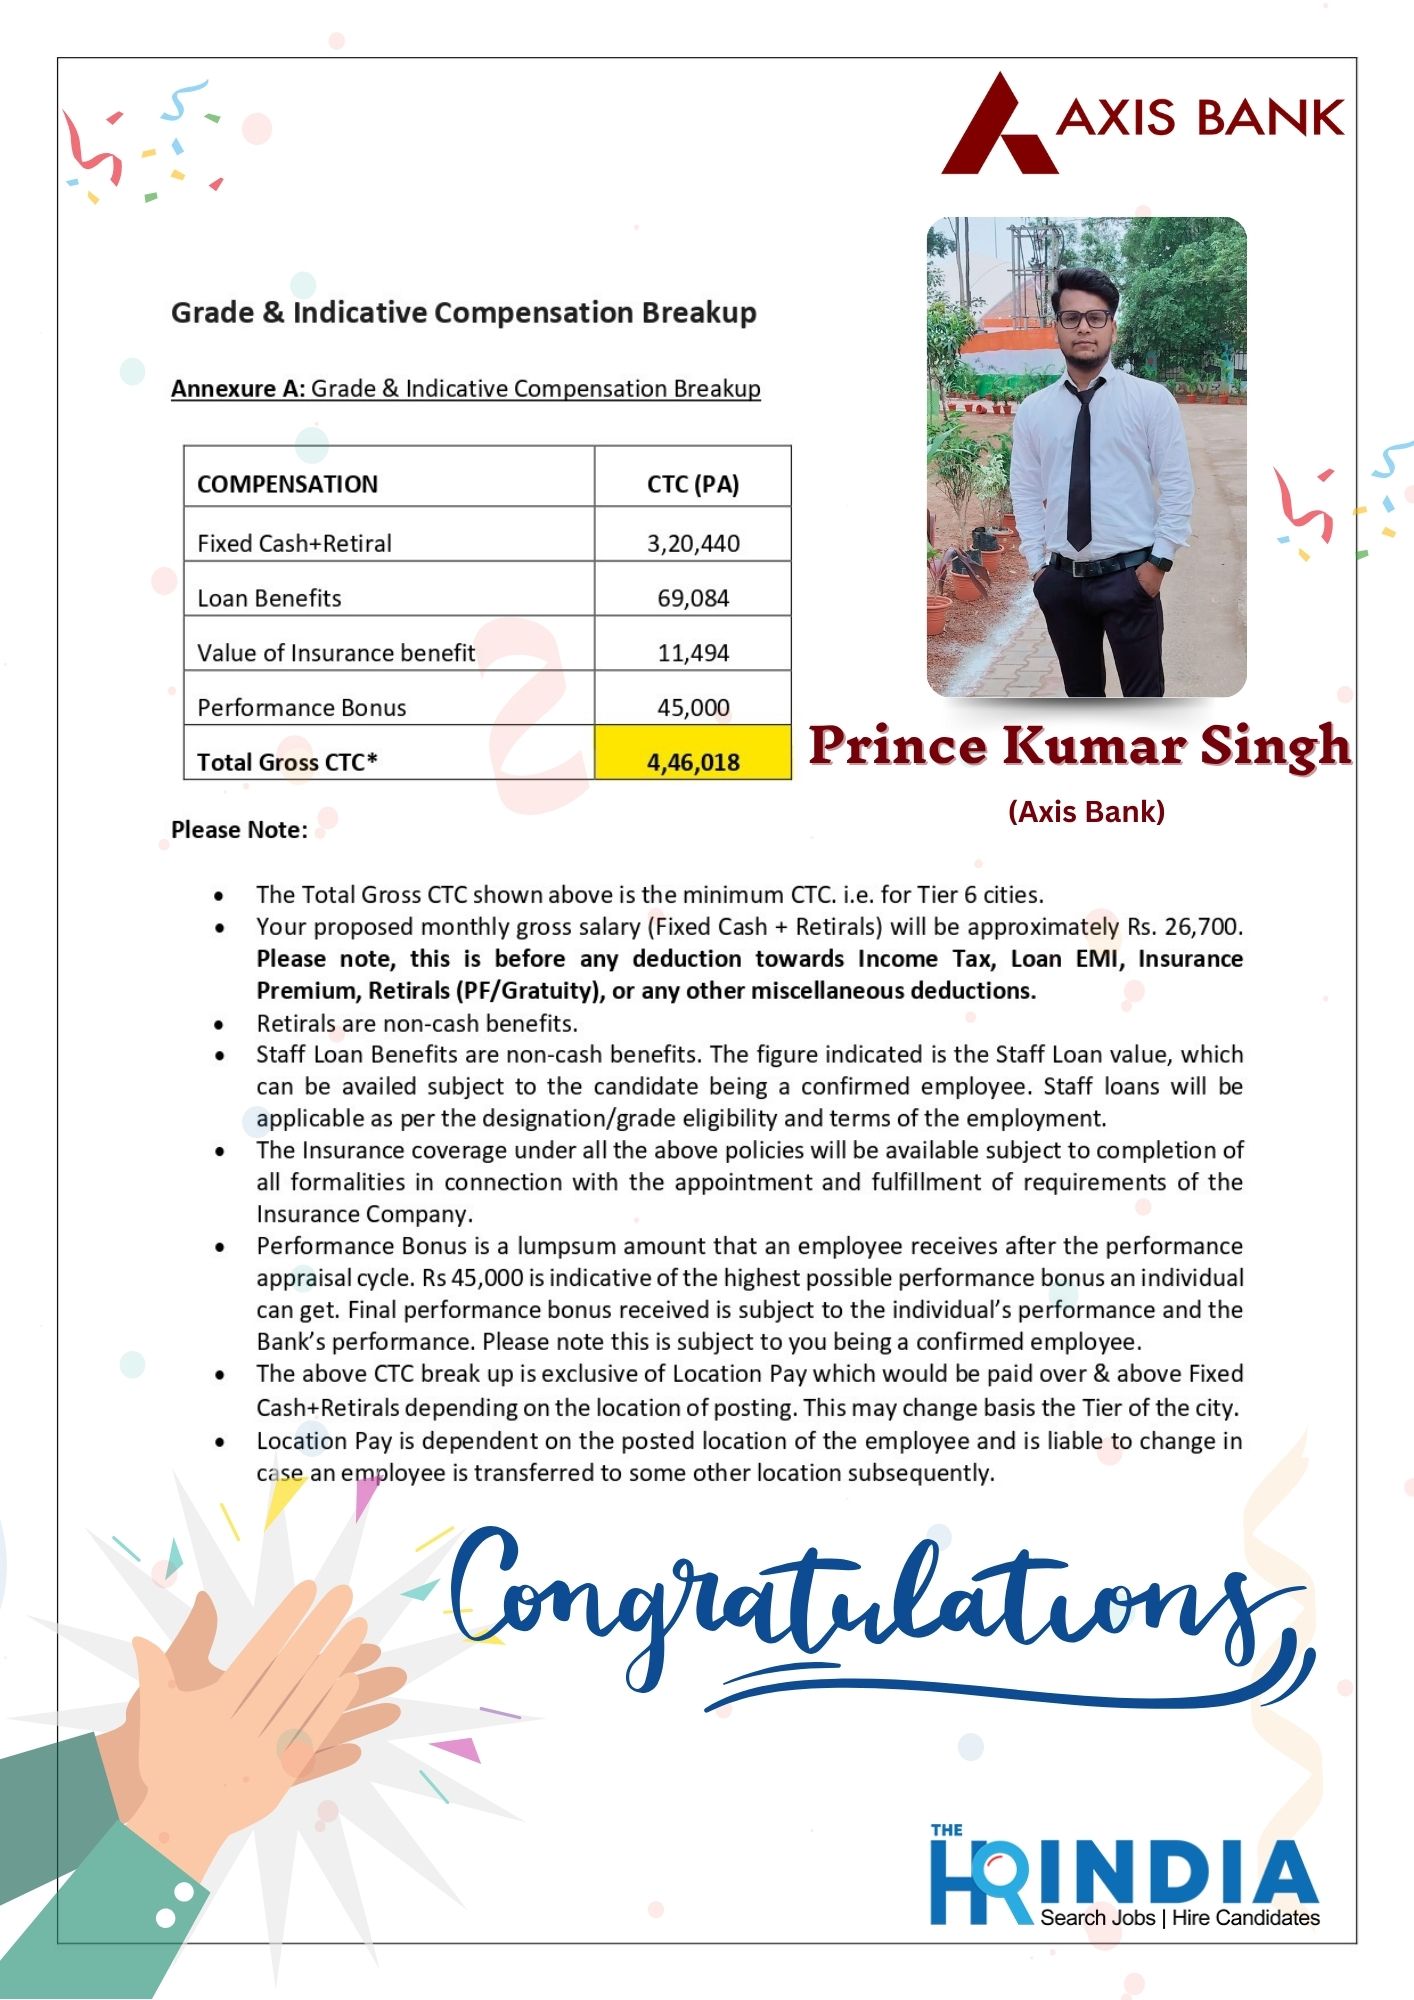 Prince Kumar Singh  | The HR India